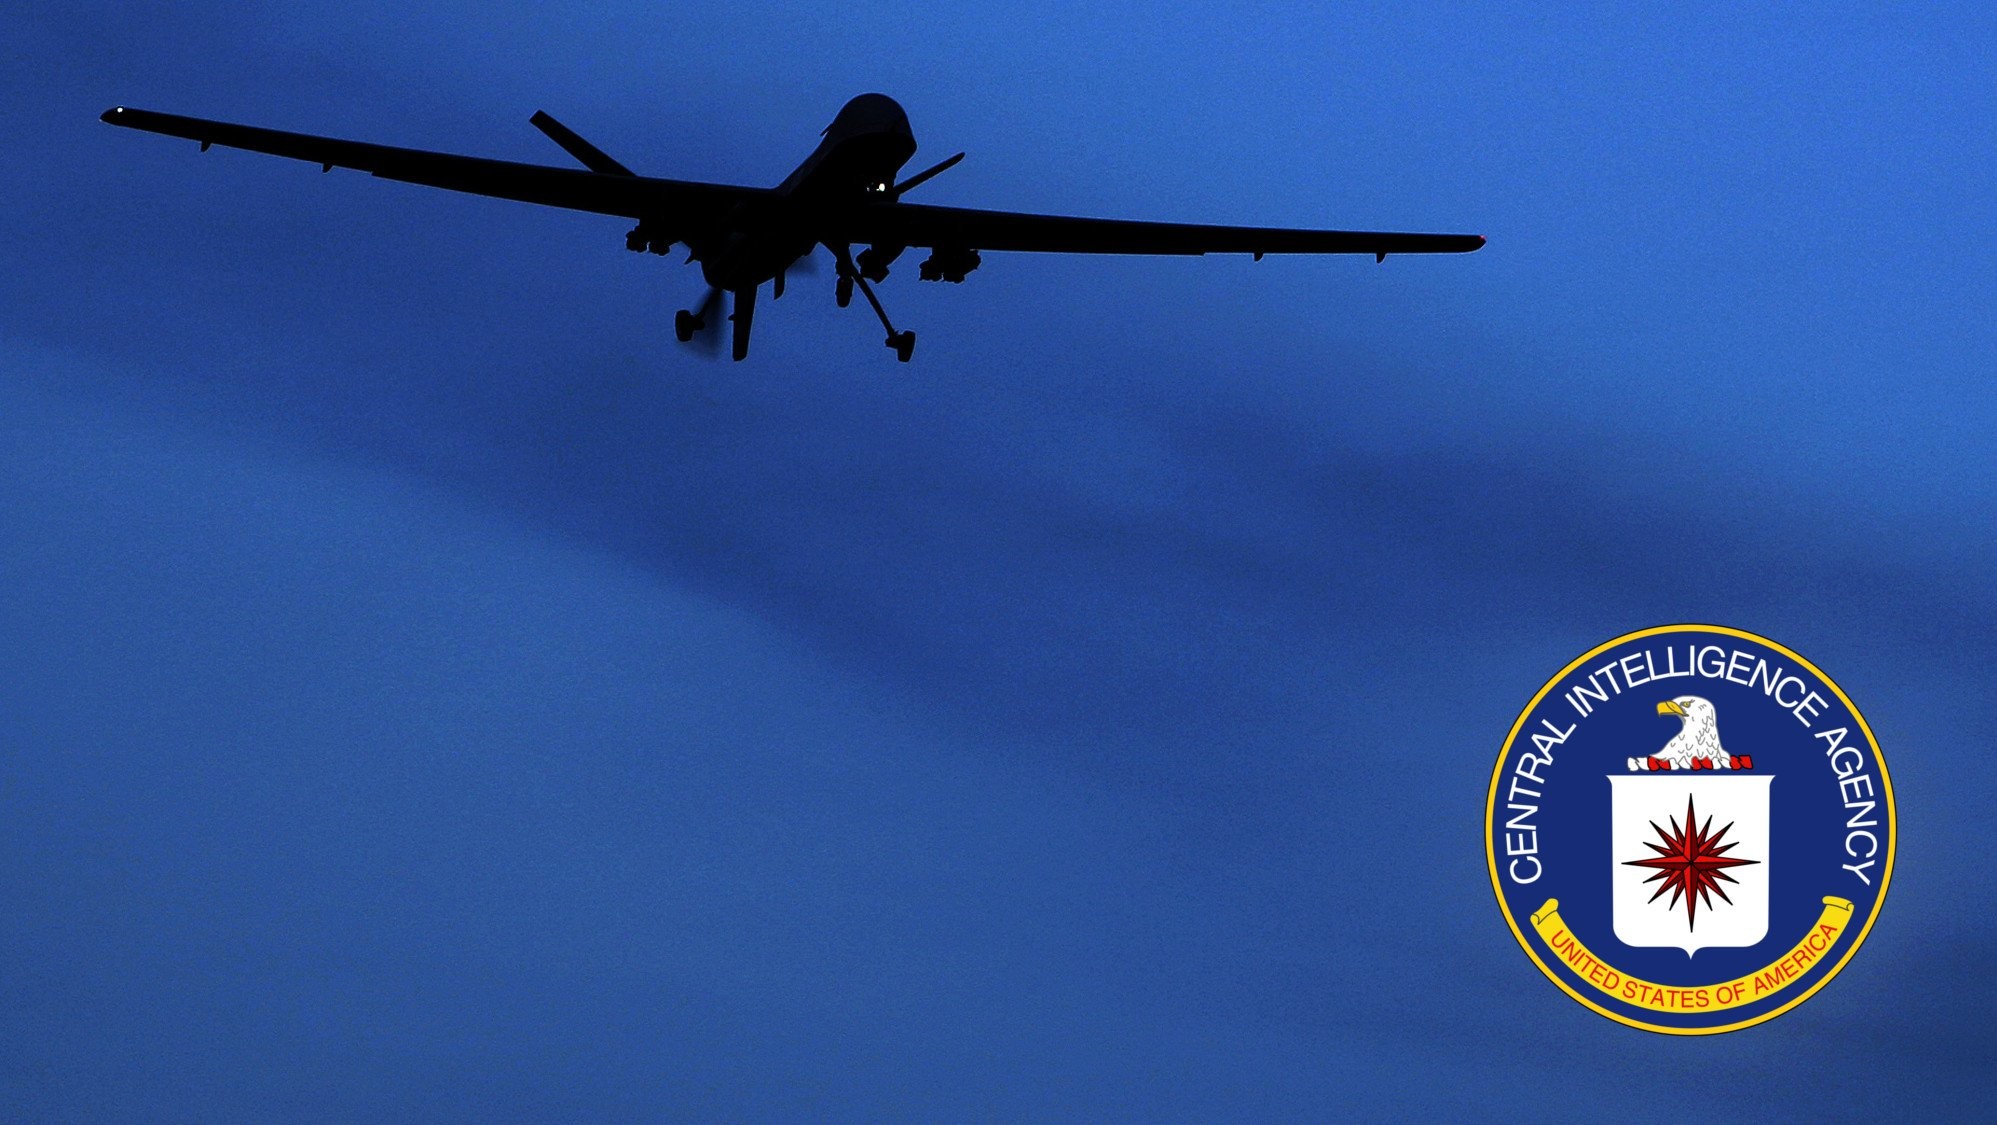 CIA Central Intelligence Agency crime usa america spy logo wallpaper 421703 WallpaperUP